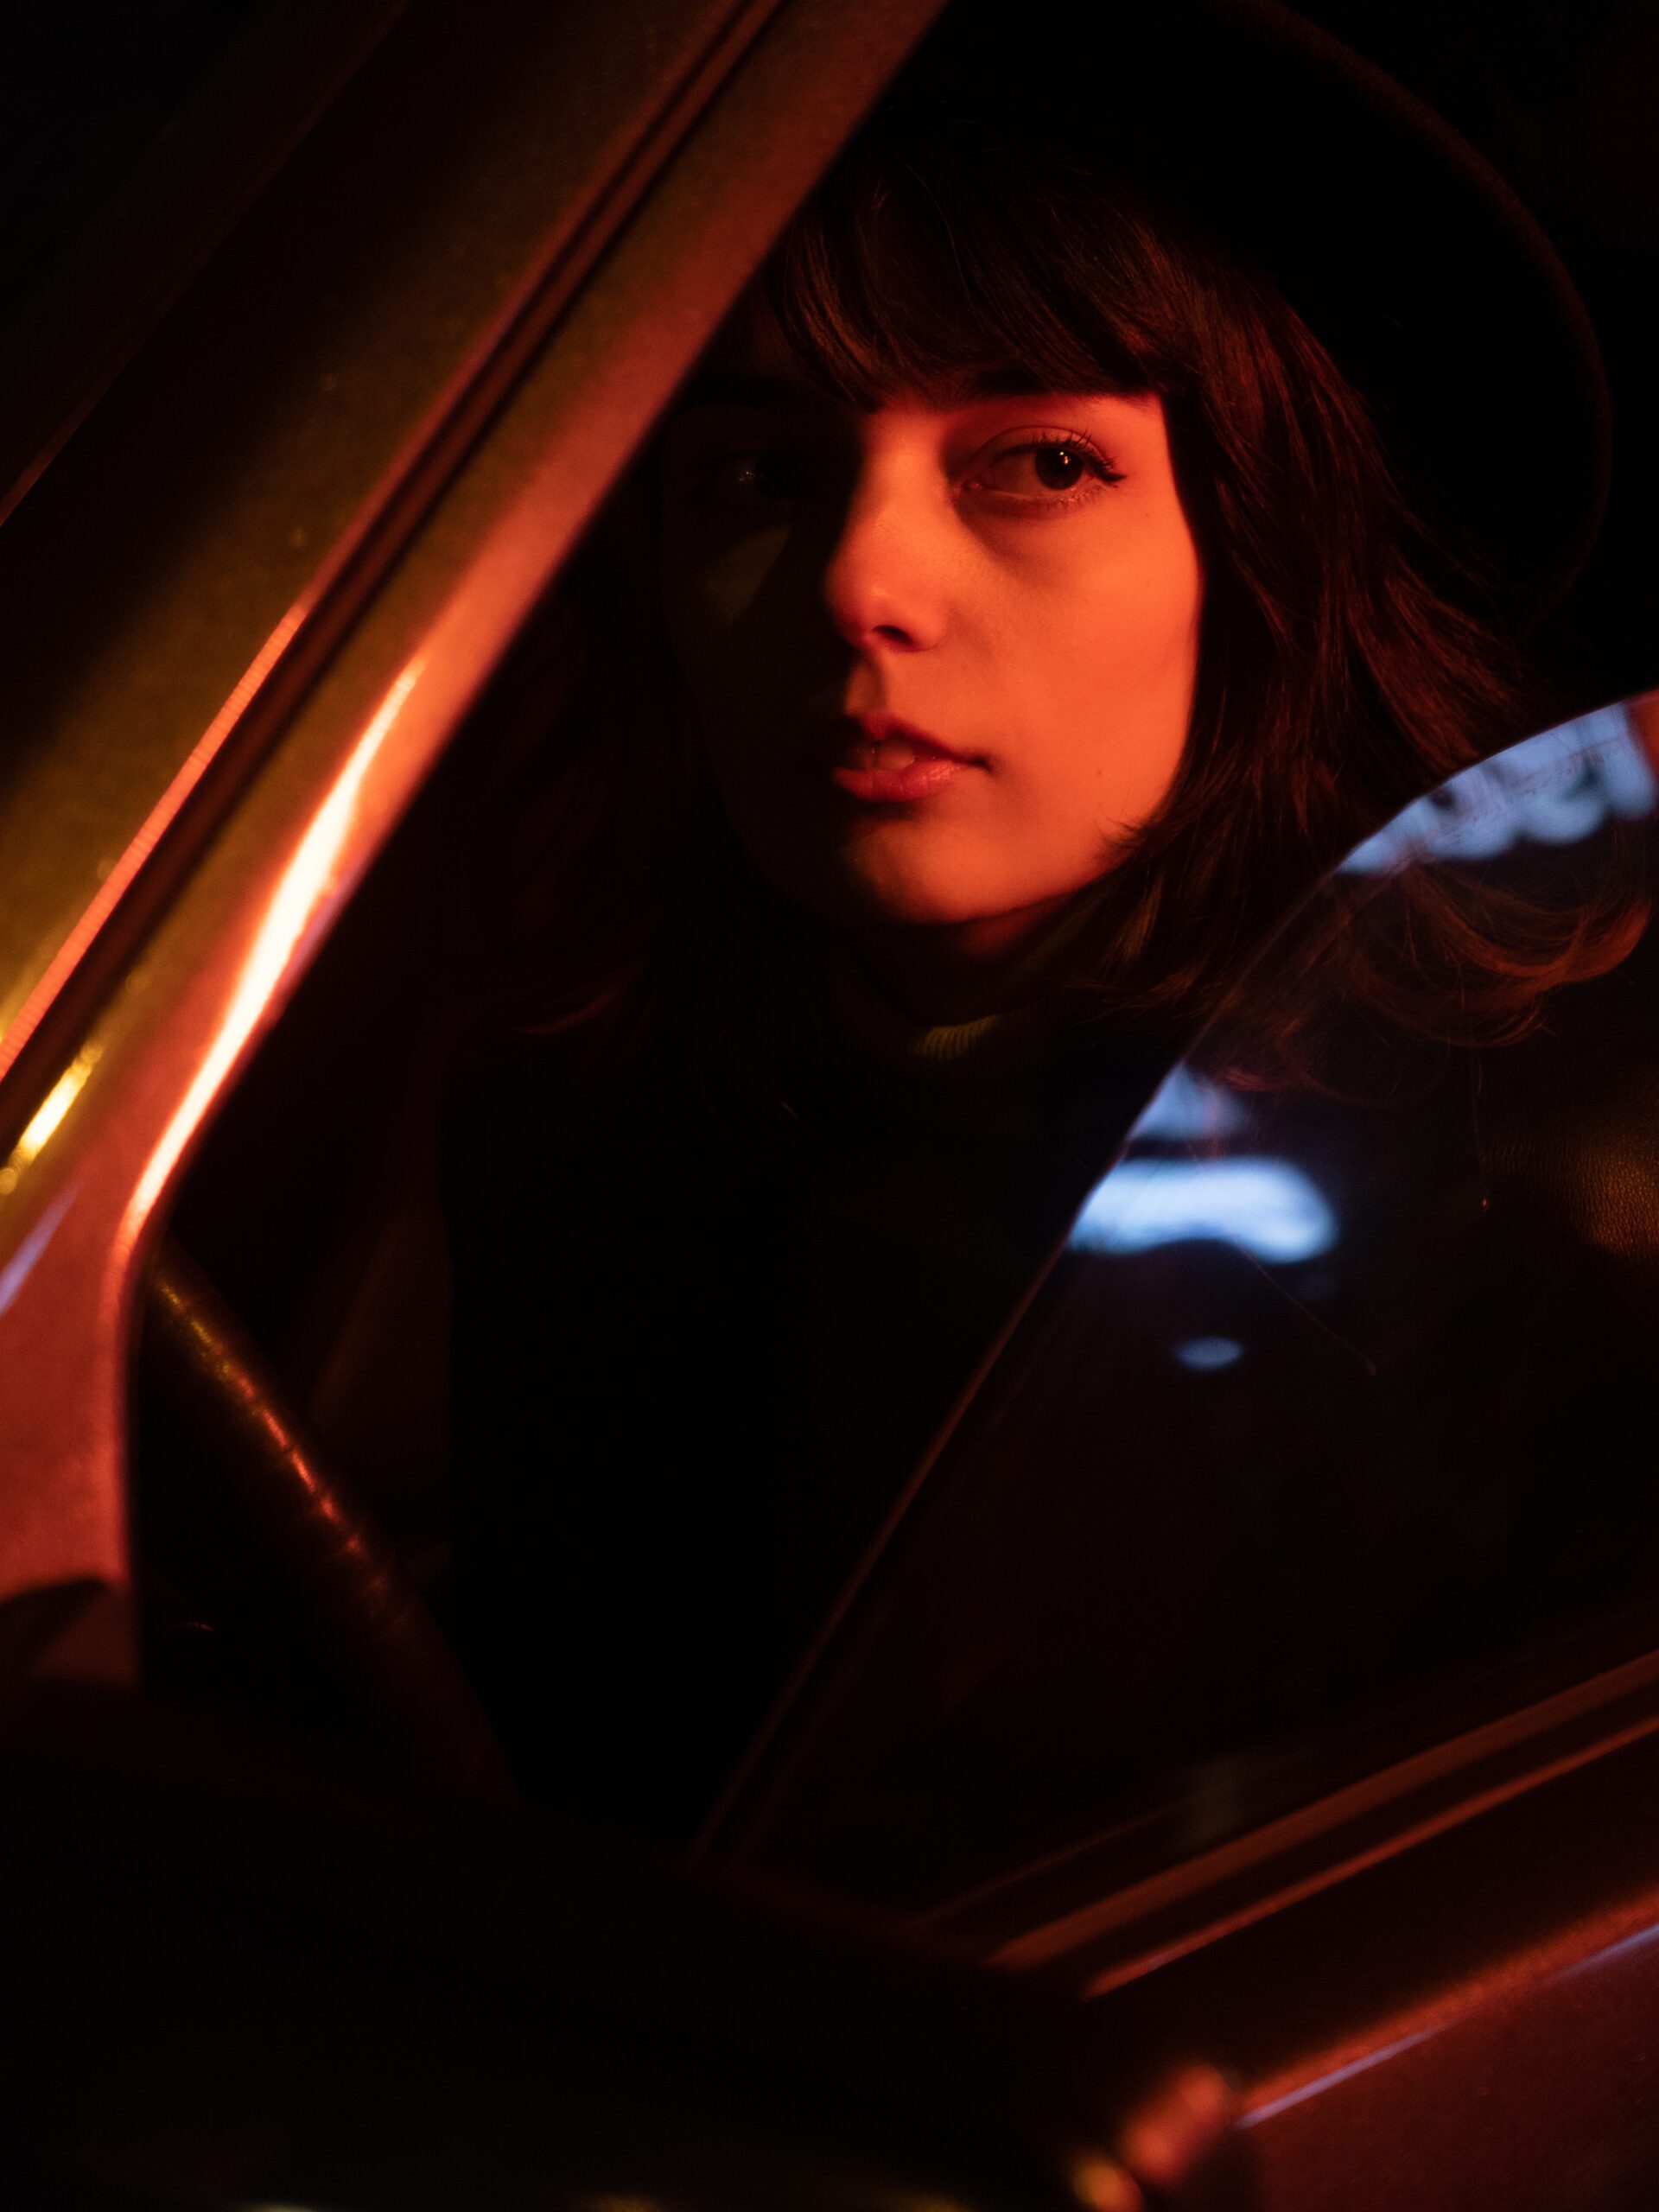 Portrait of a woman sitting in a car